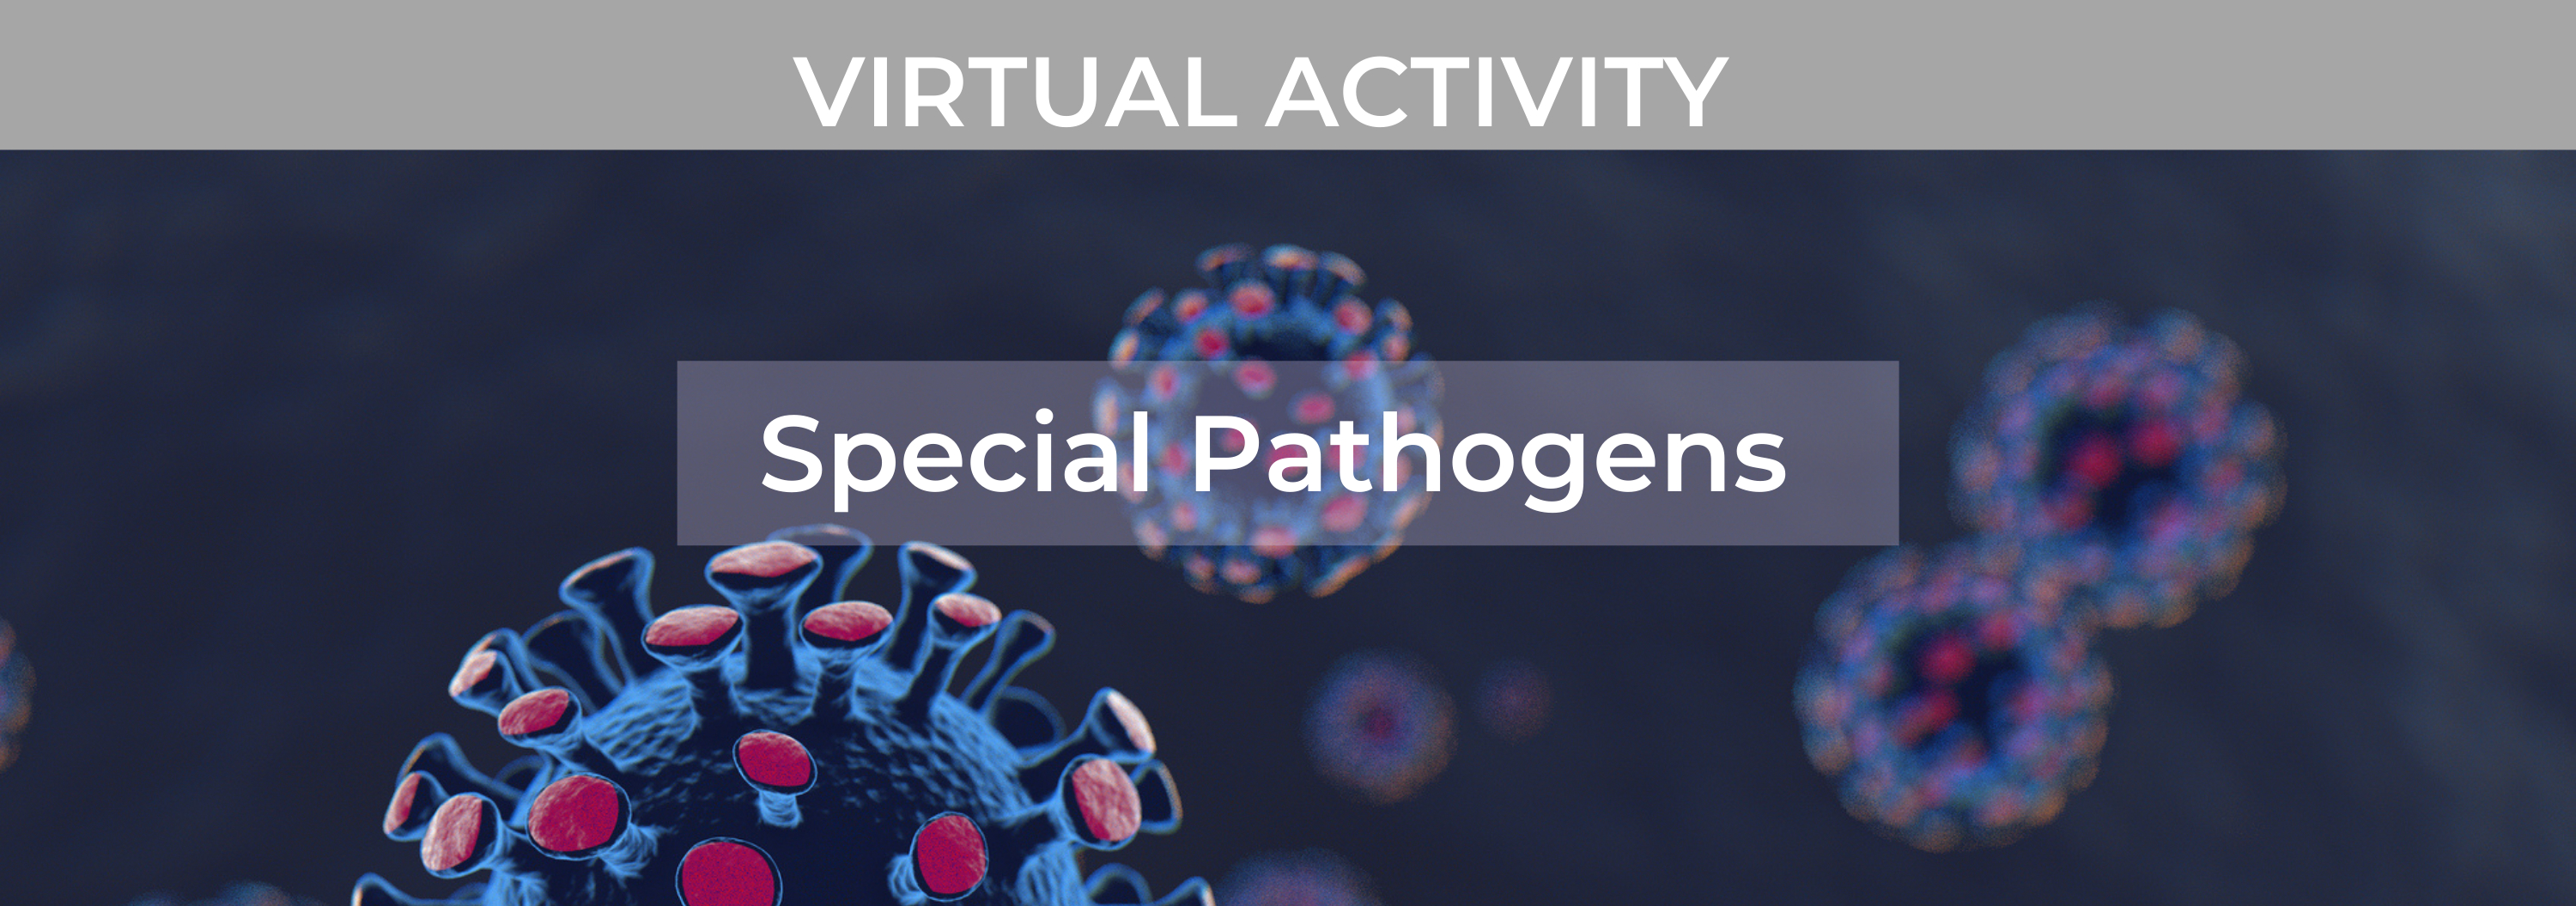 2021 Special Pathogens Virtual Symposium Banner